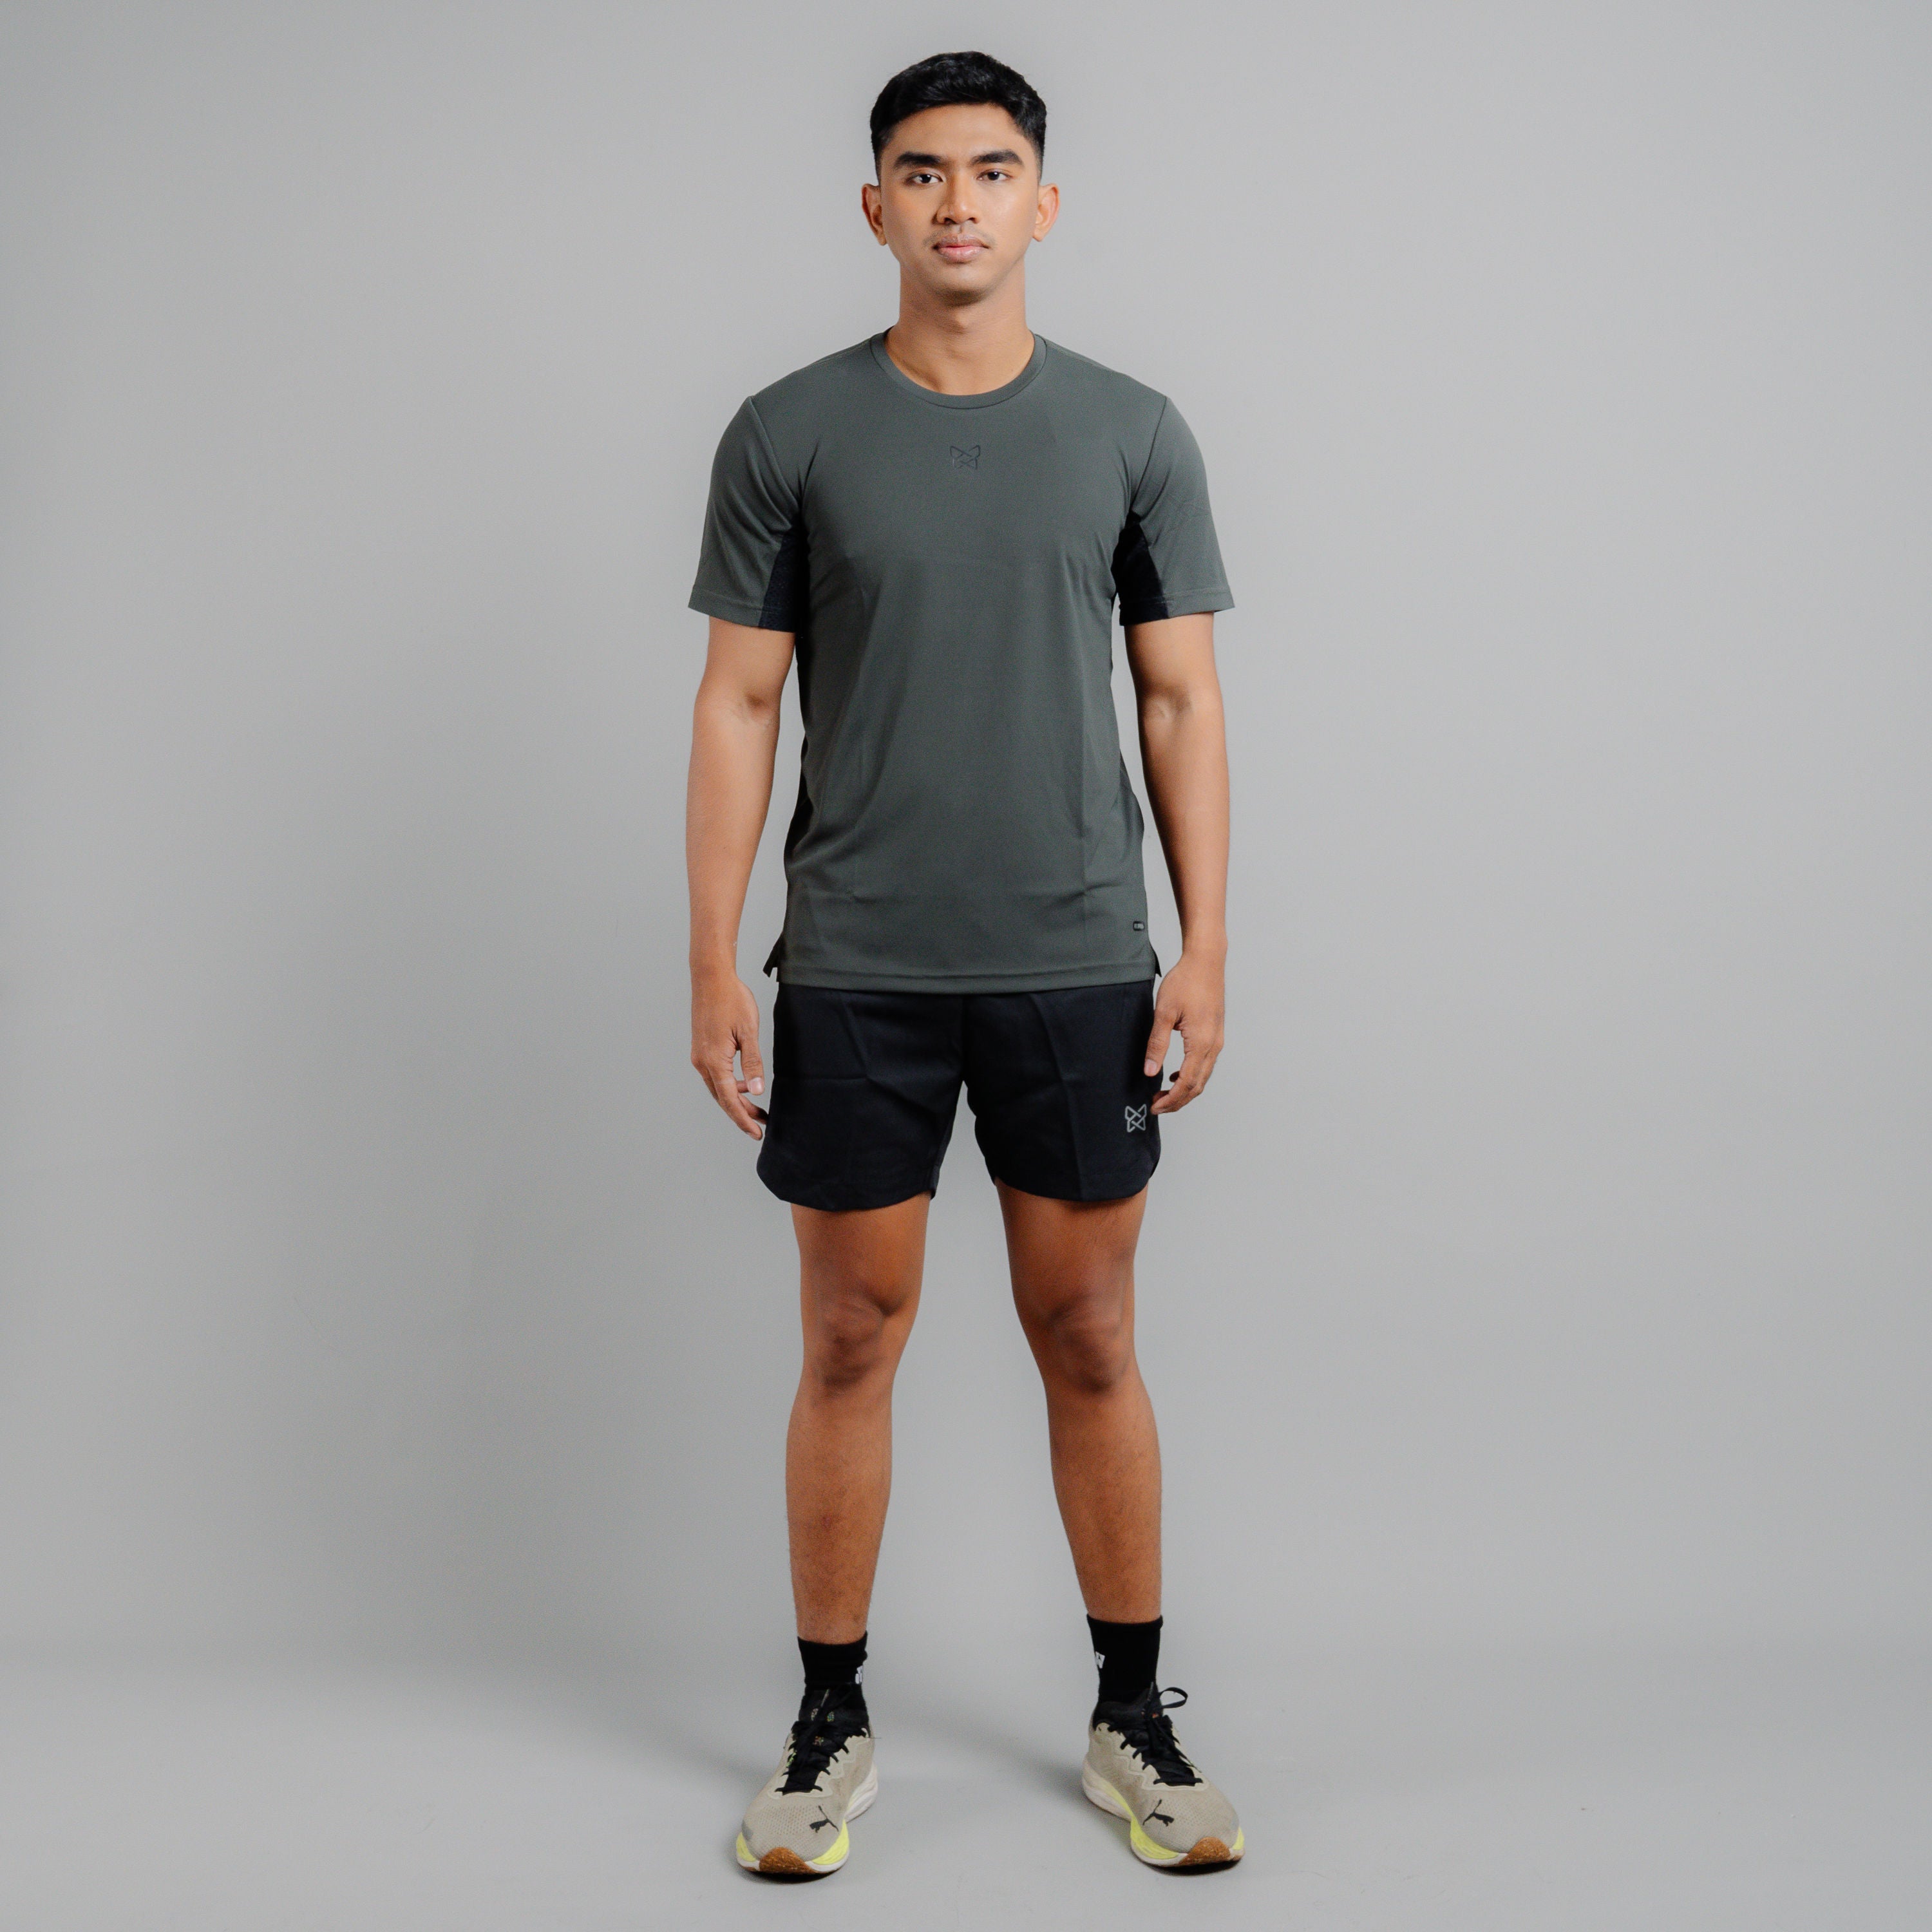 PACE Running T-Shirt - Kaos Lari Dry Fit